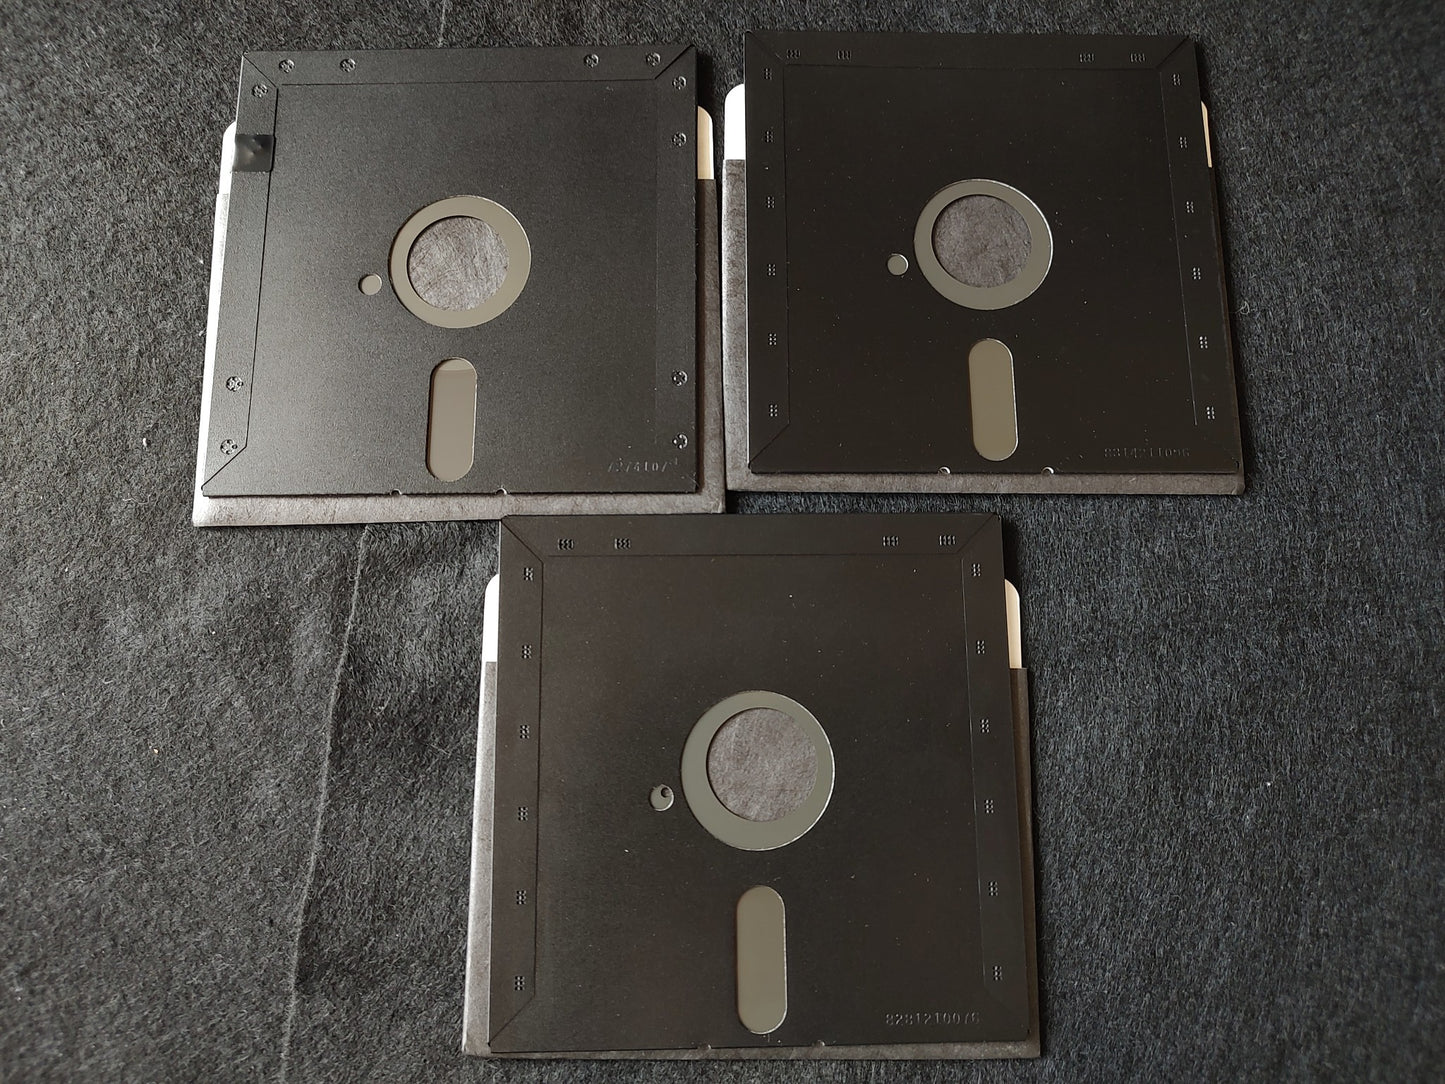 PC-8801 PC88 Advanced Fantasian Game Disks, Manual, Box set, Working-f0623-